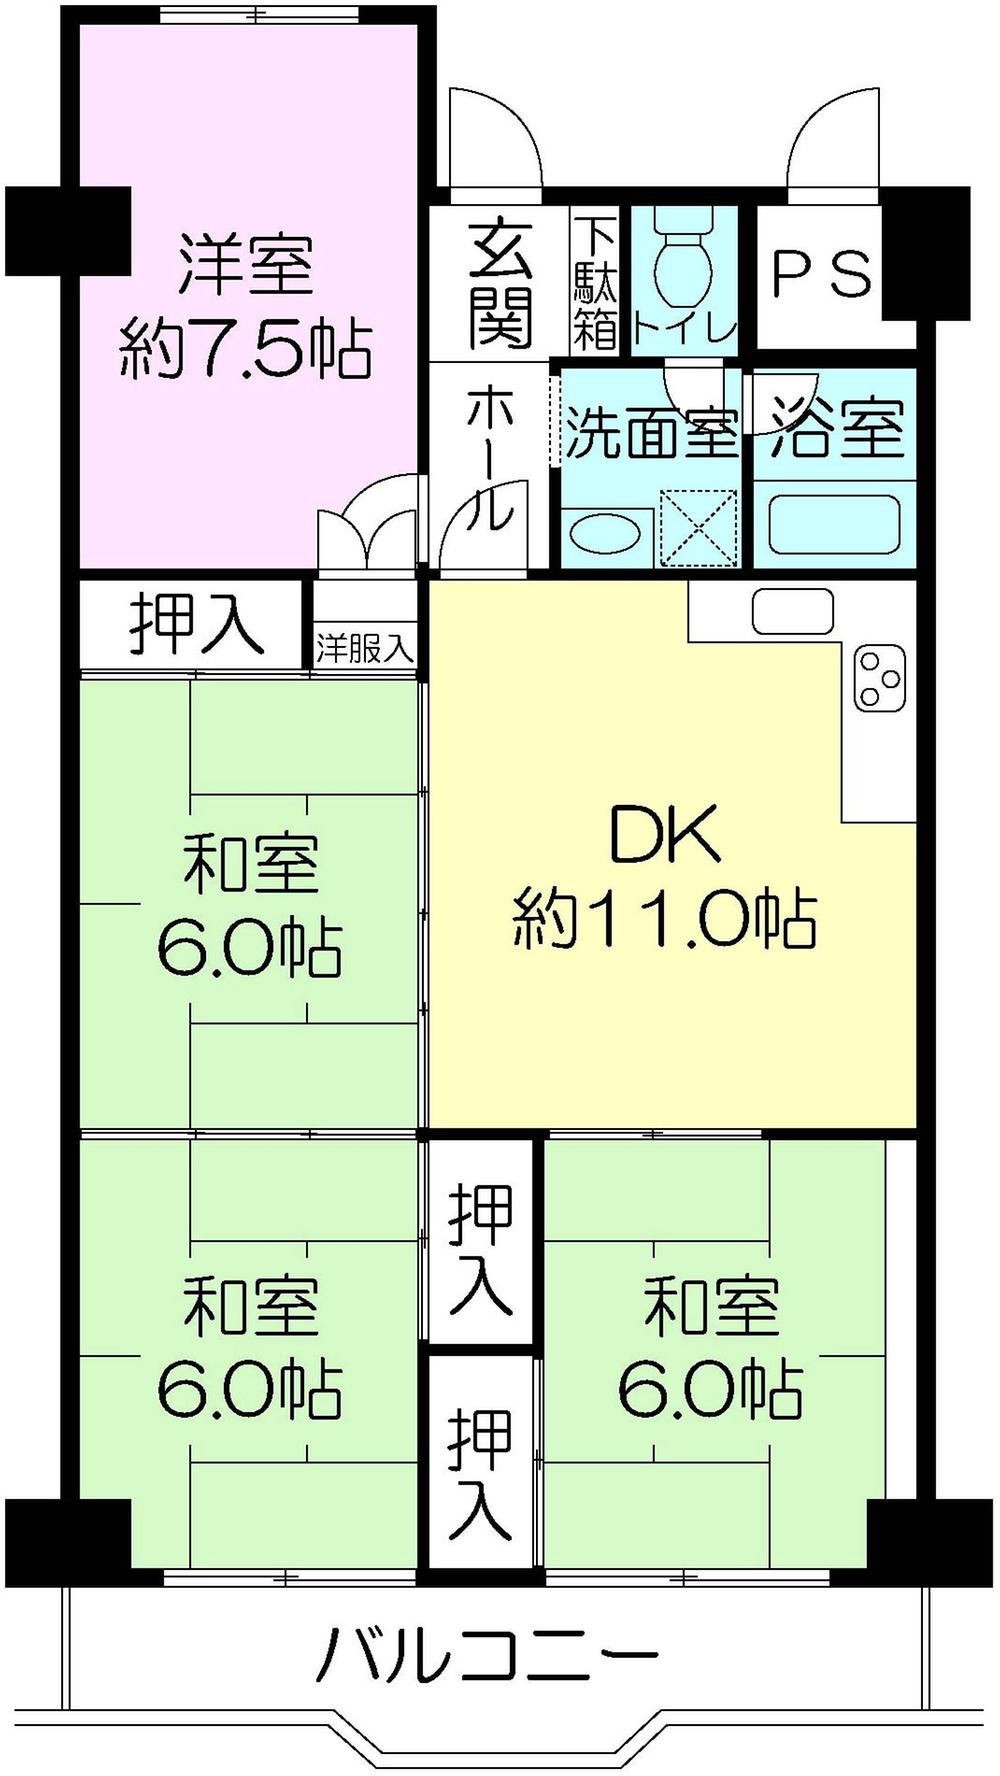 Floor plan. 4DK, Price 12.8 million yen, Occupied area 81.61 sq m , Balcony area 9.1 sq m